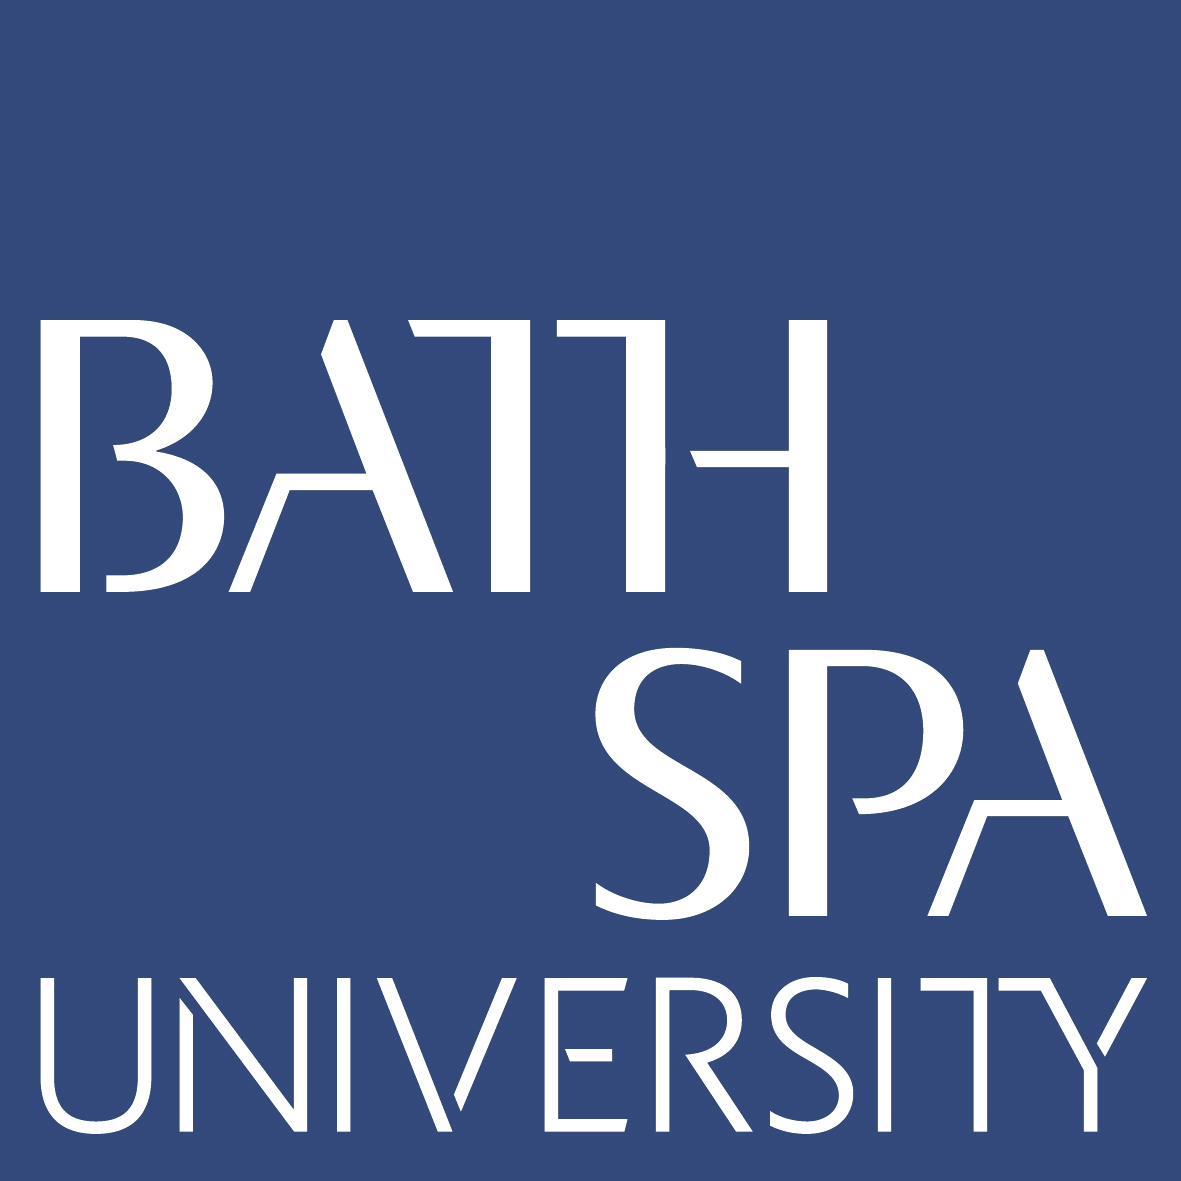 Bathspauniversity Logo CMYK